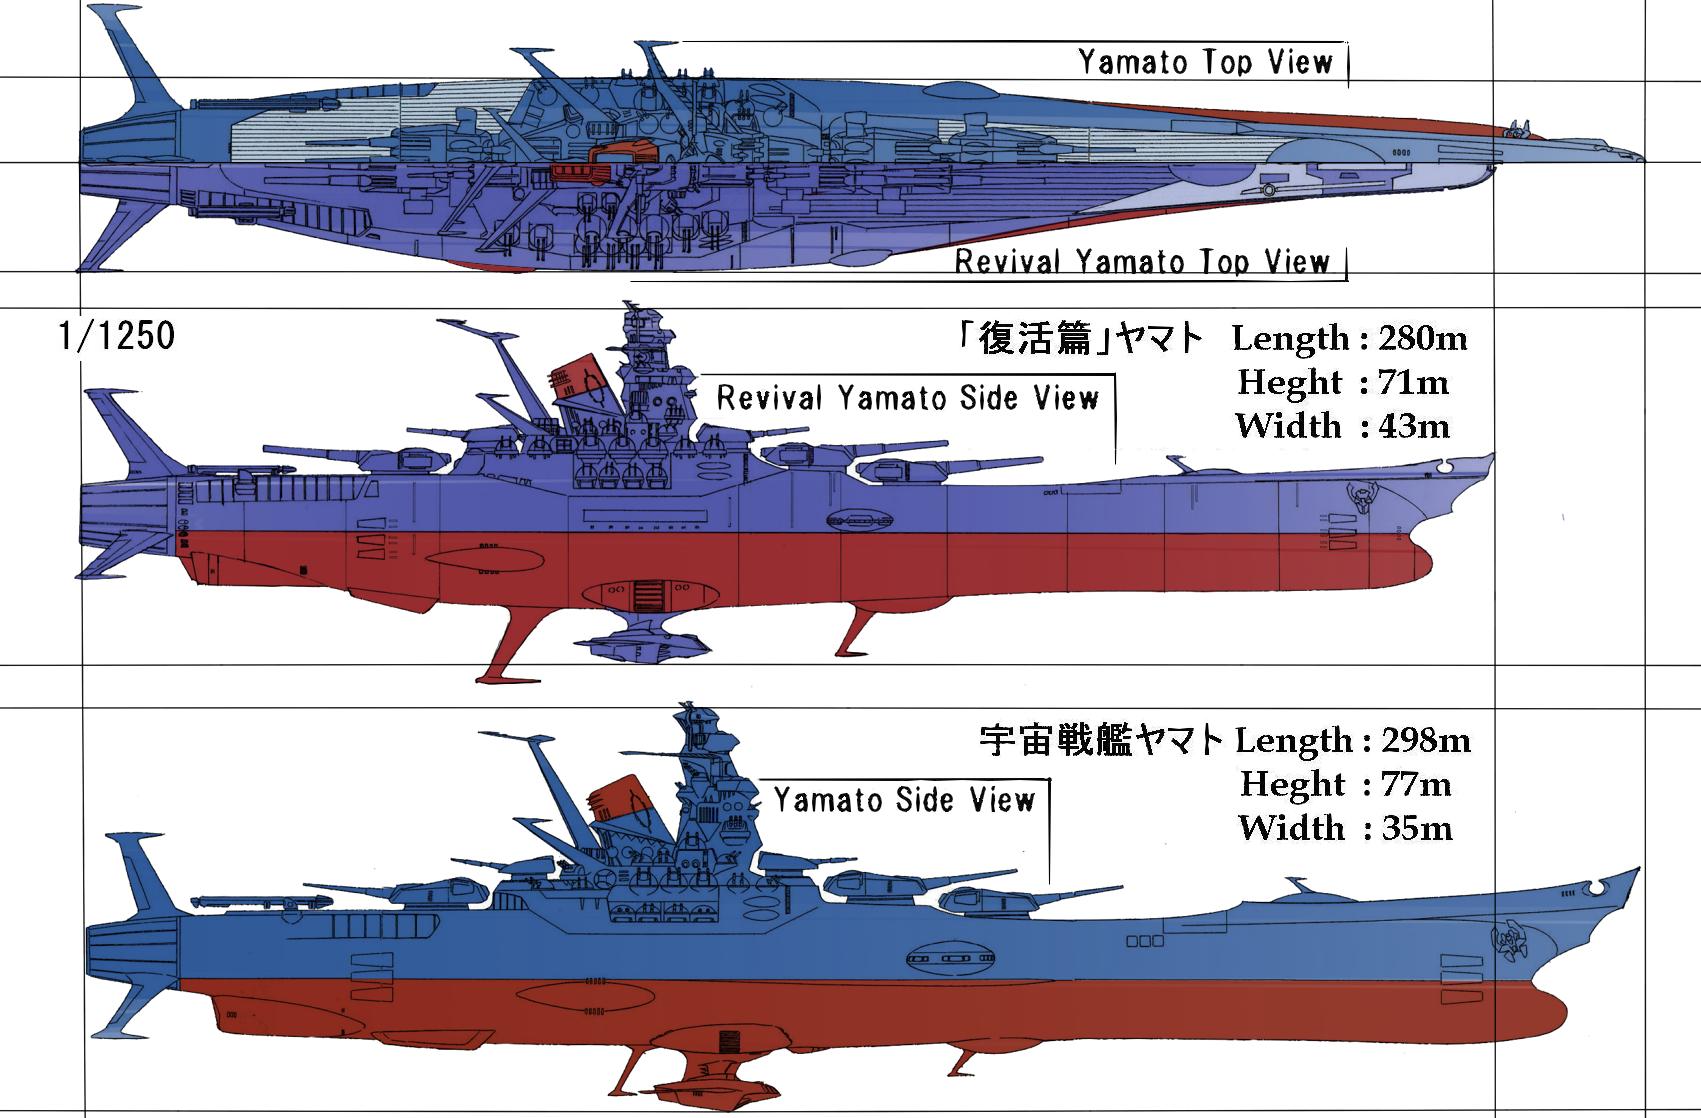 Space Battleship Yamato HD wallpapers, Desktop wallpaper - most viewed